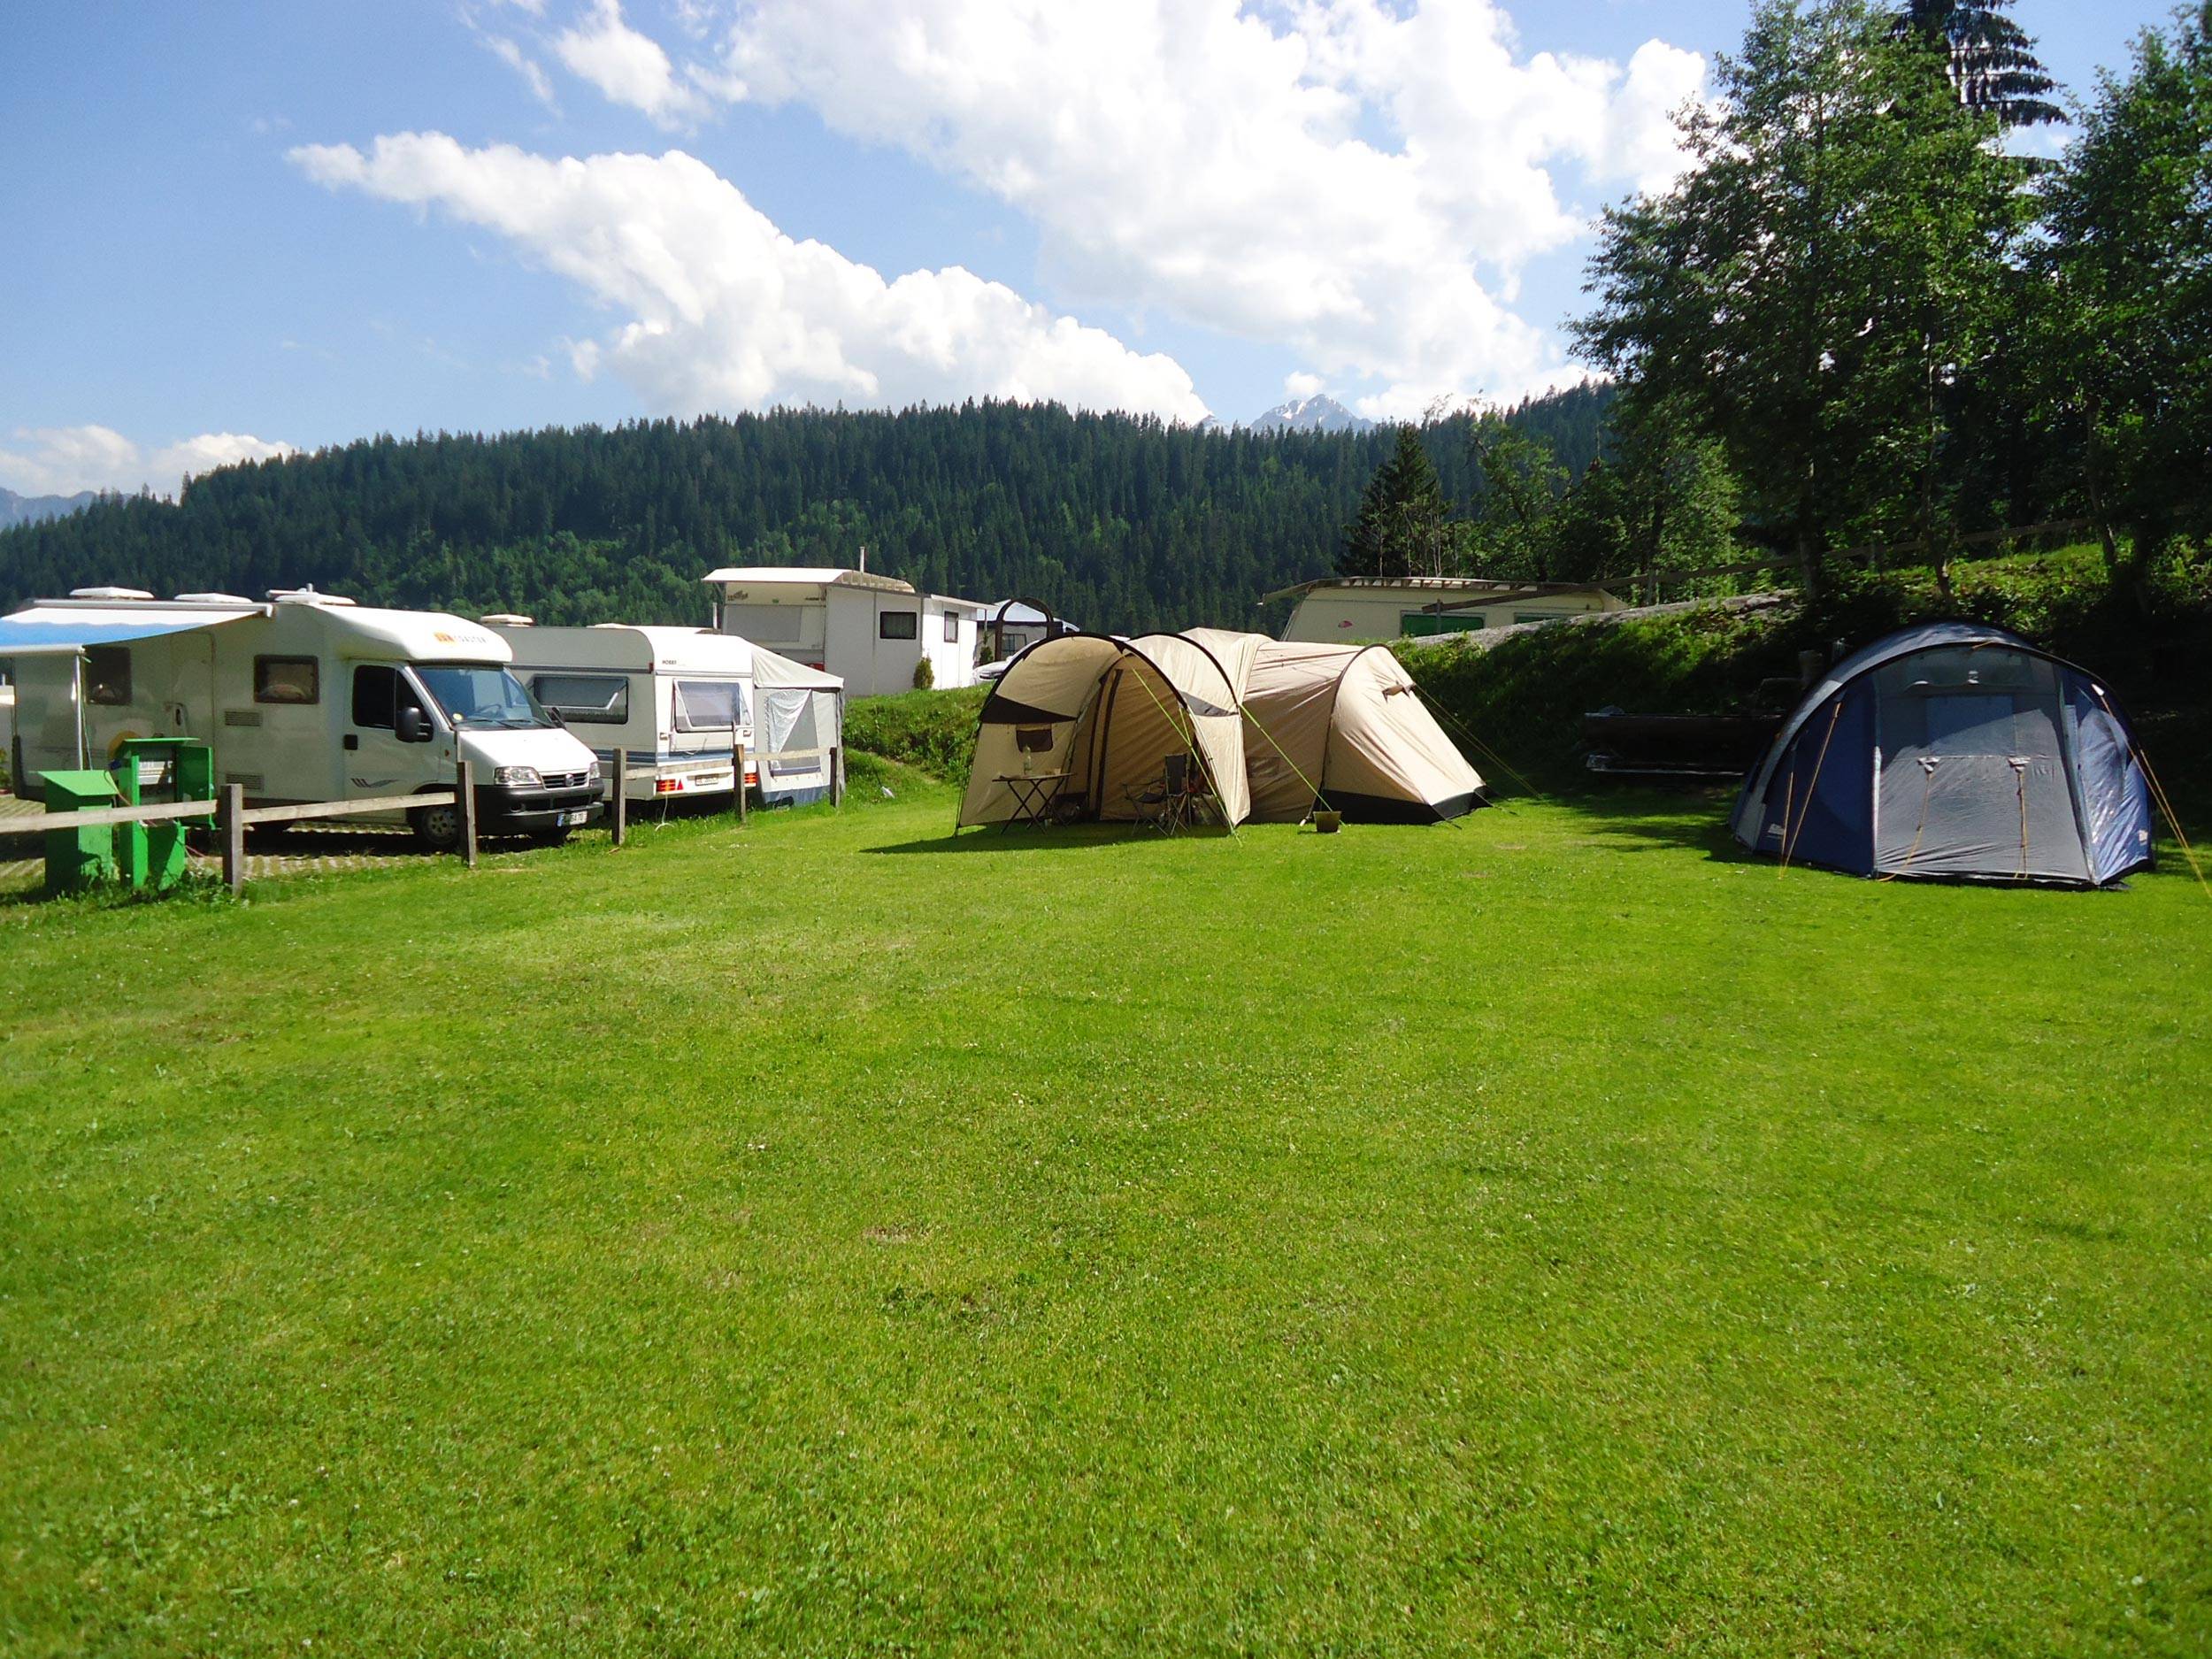 Camping space. Палаточные лагеря в Германии. Мартьянково кемпинг. Балццон кемпинг. Лагерь кемпинг Молдова.